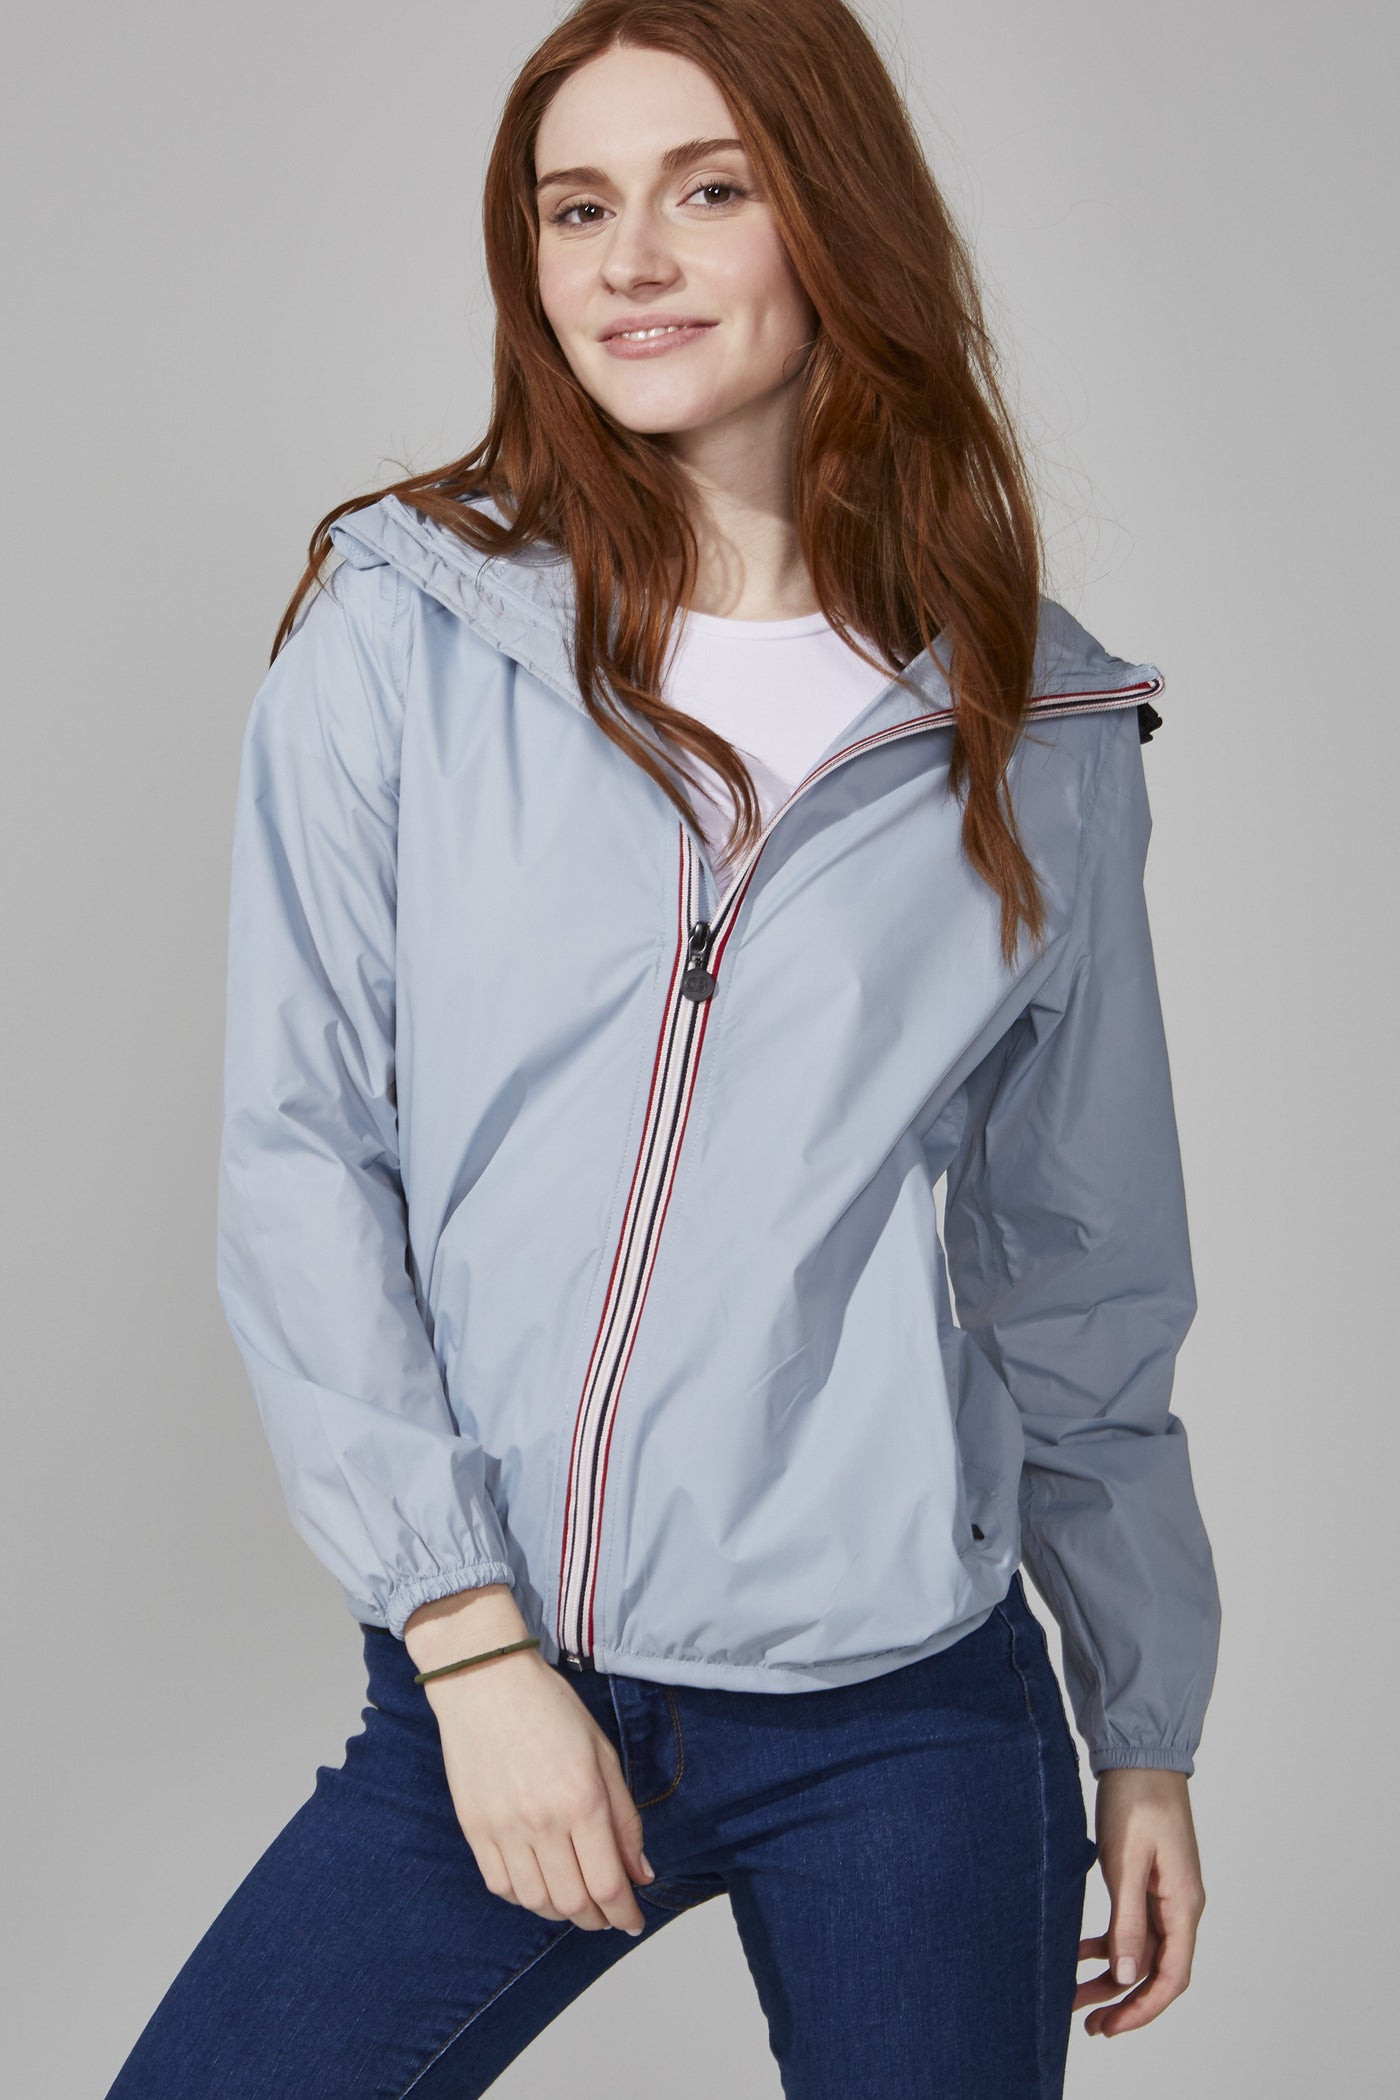 O8 Lifestyle - Sloane Full Zip Packable Rain Jacket